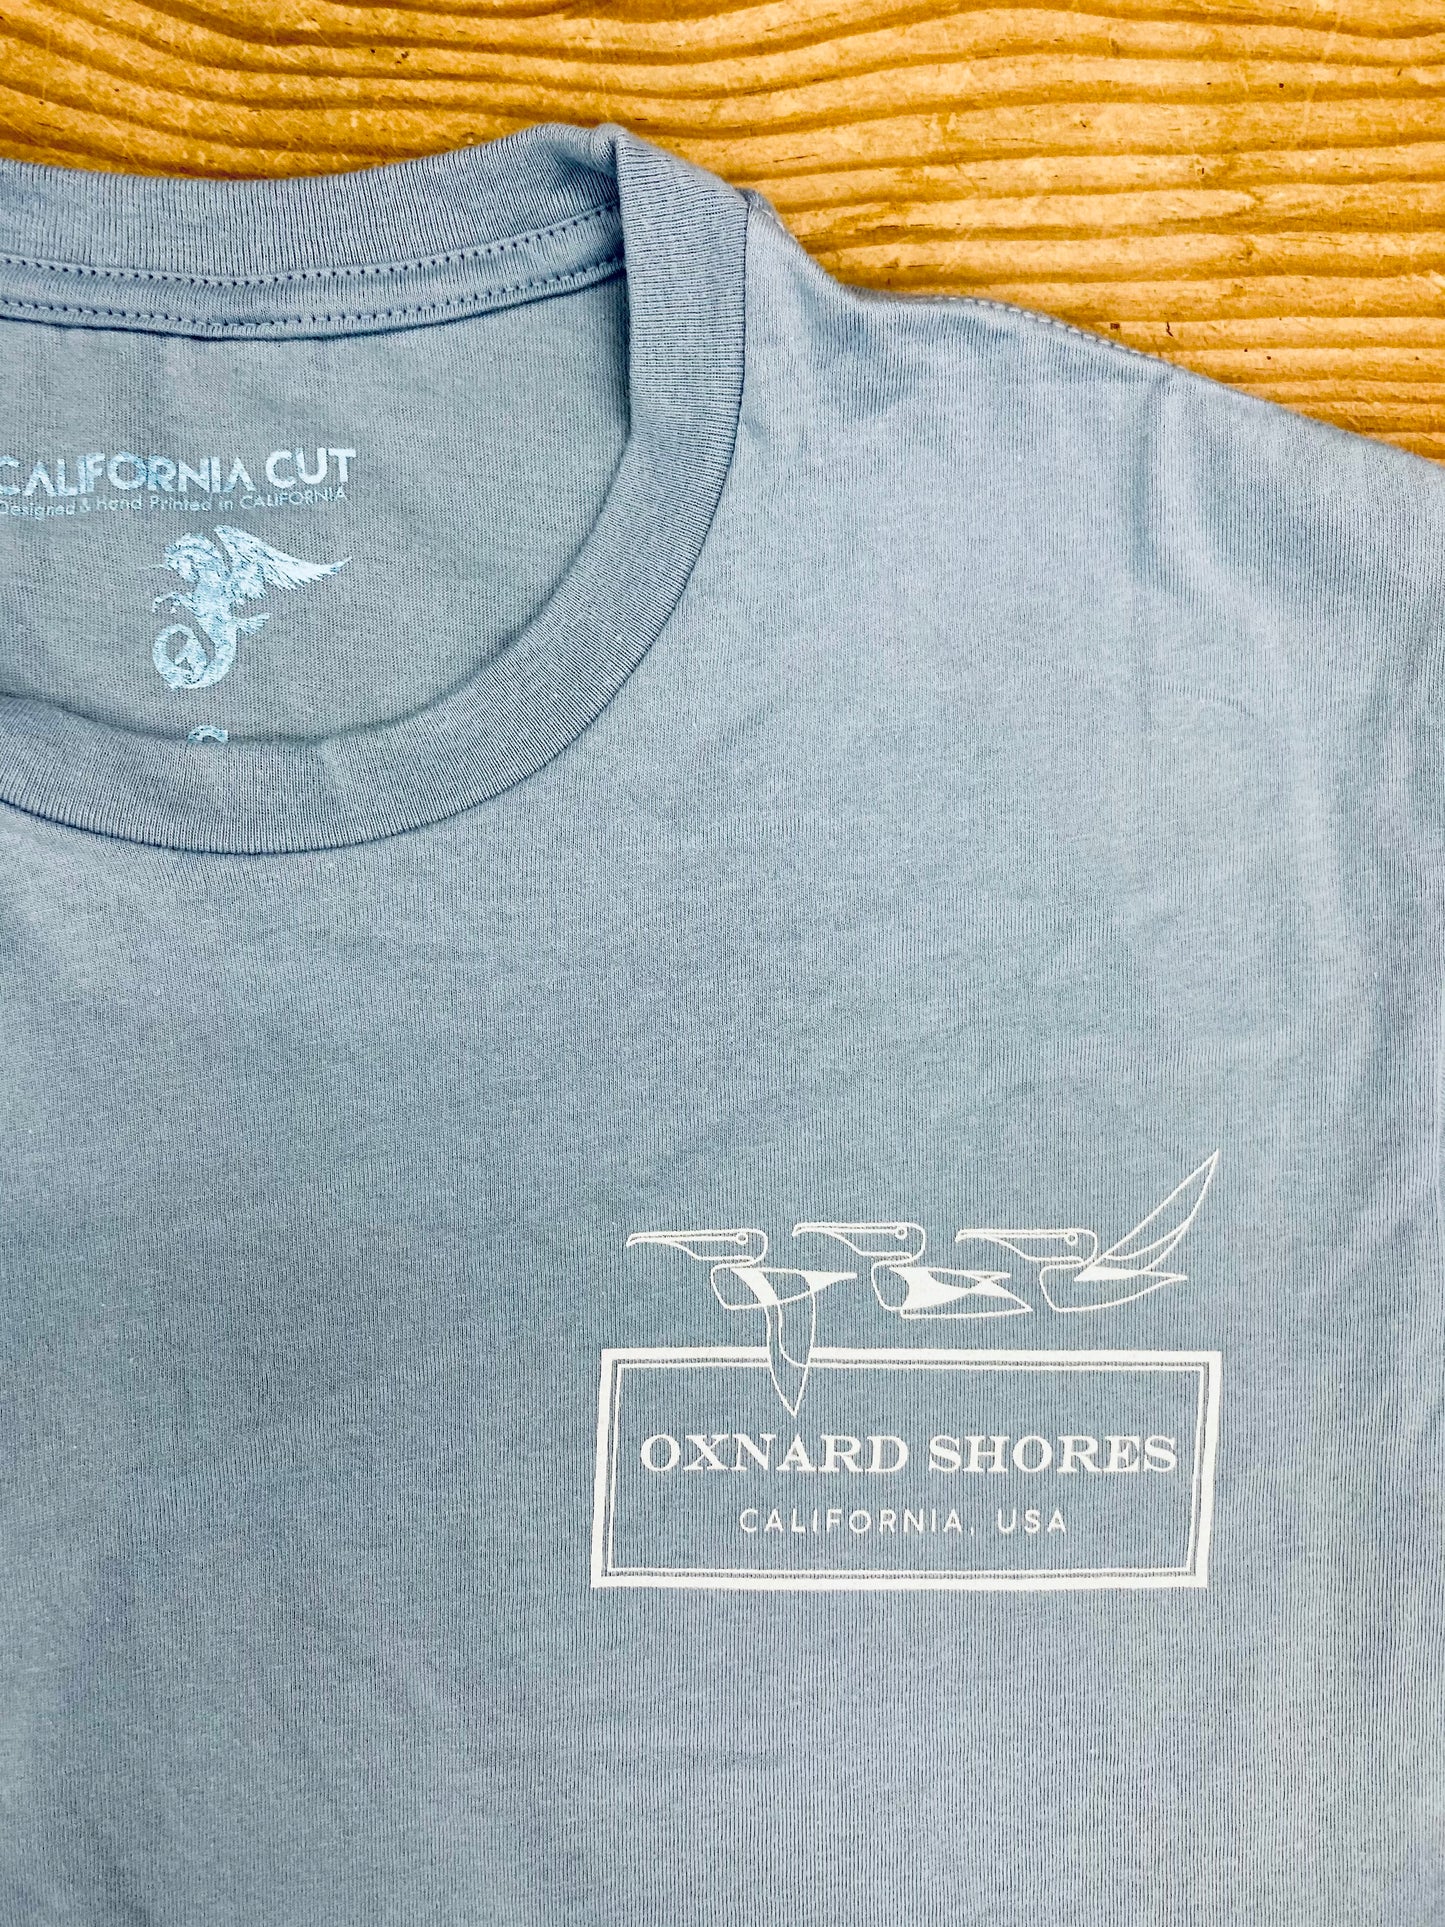 Oxnard Shores Tshirt